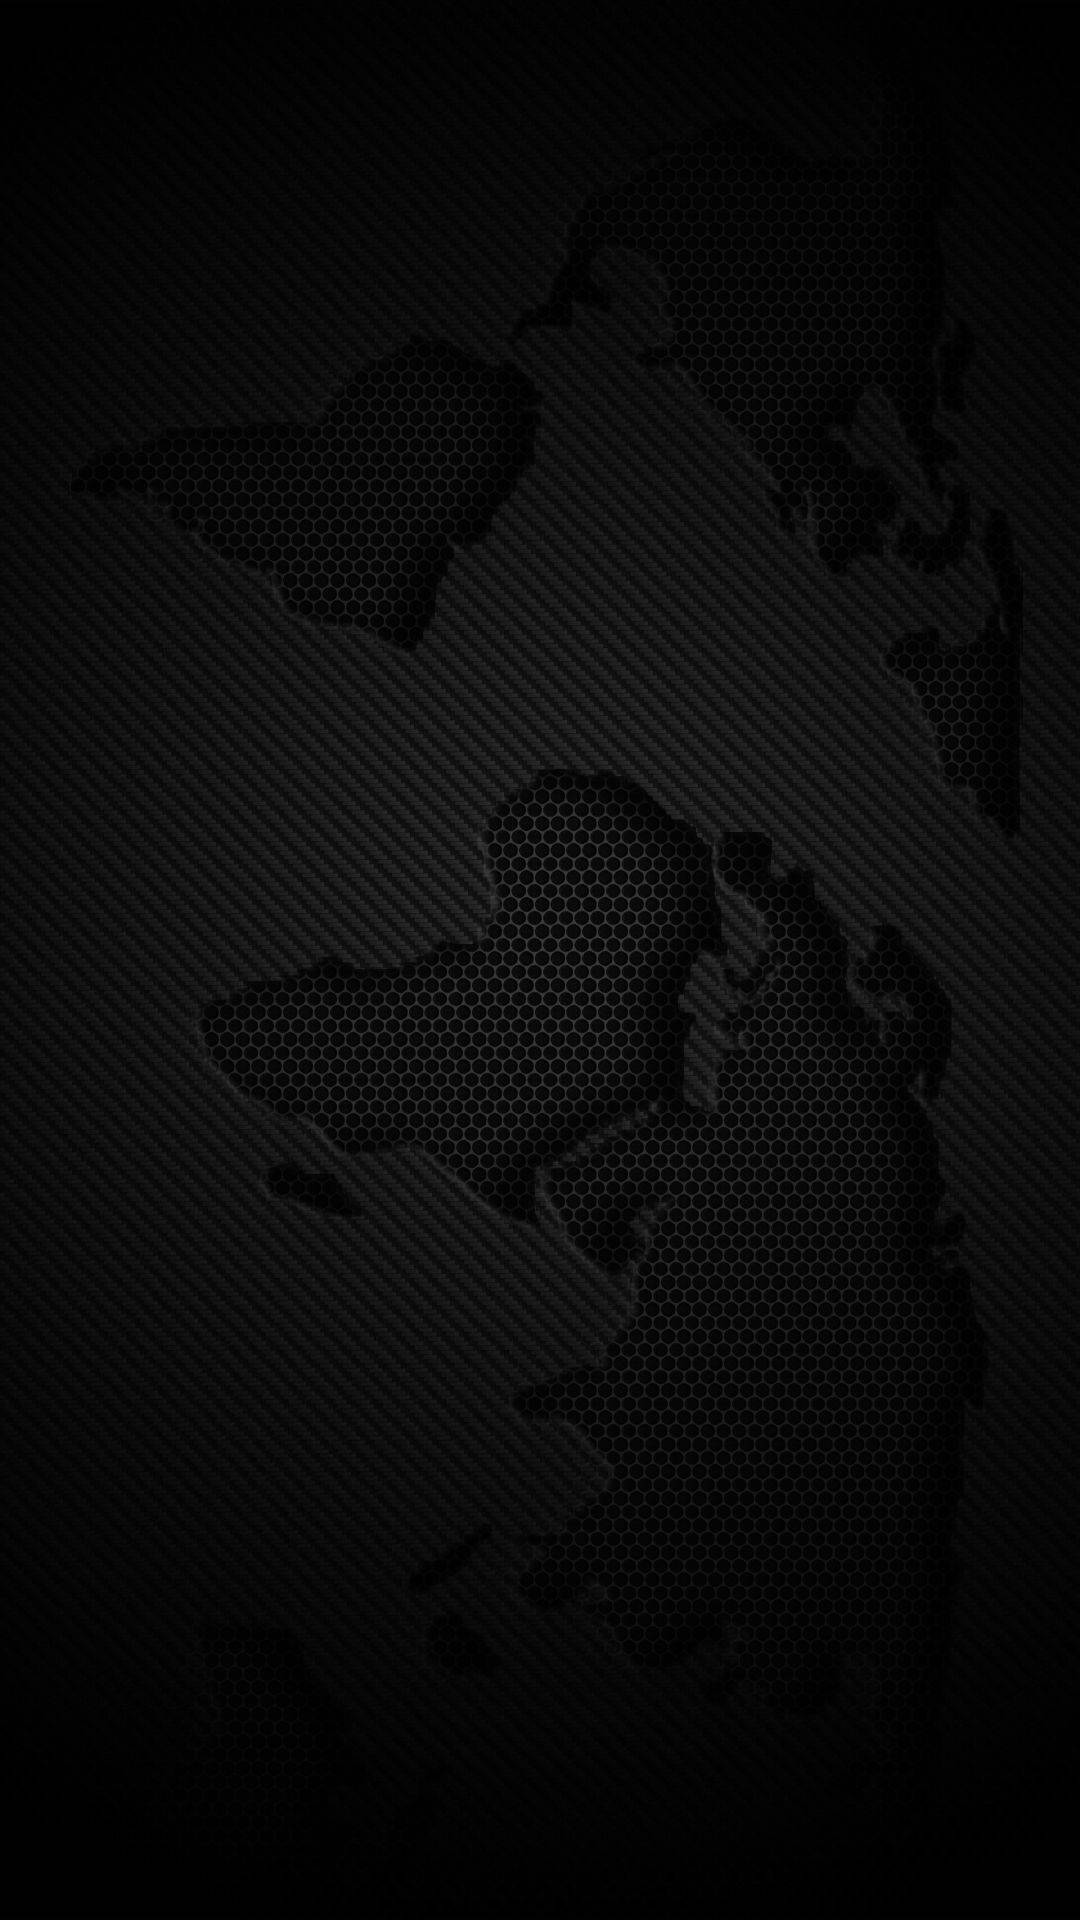 Hexagonal World Map Solid Black Iphone Background